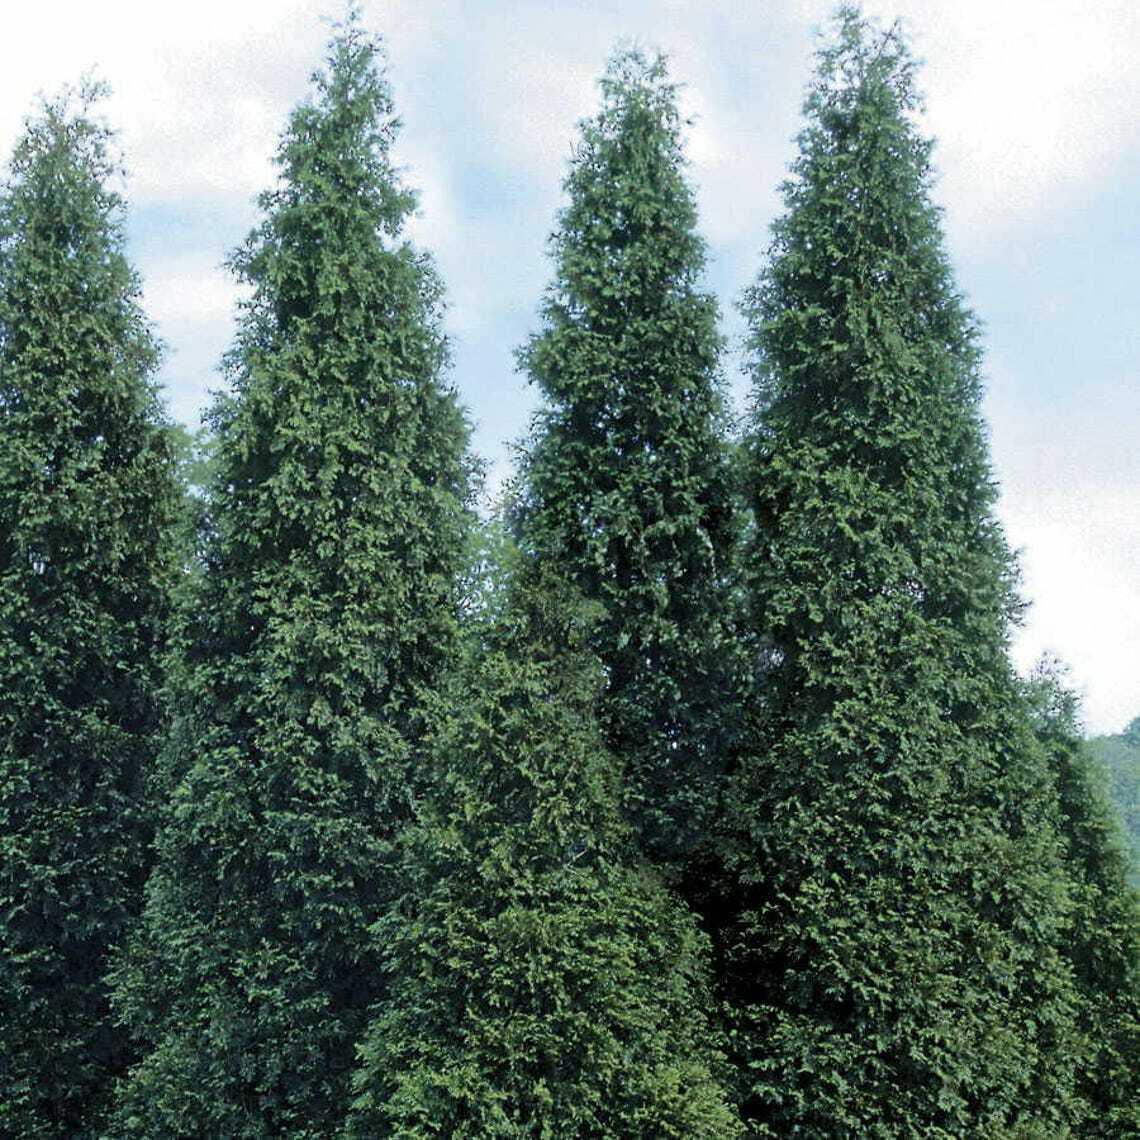 70 Thuja Green Giant Arborvitae Trees/Shrubs - 12-16" Tall Live Plants - 3" Pots - The Nursery Center